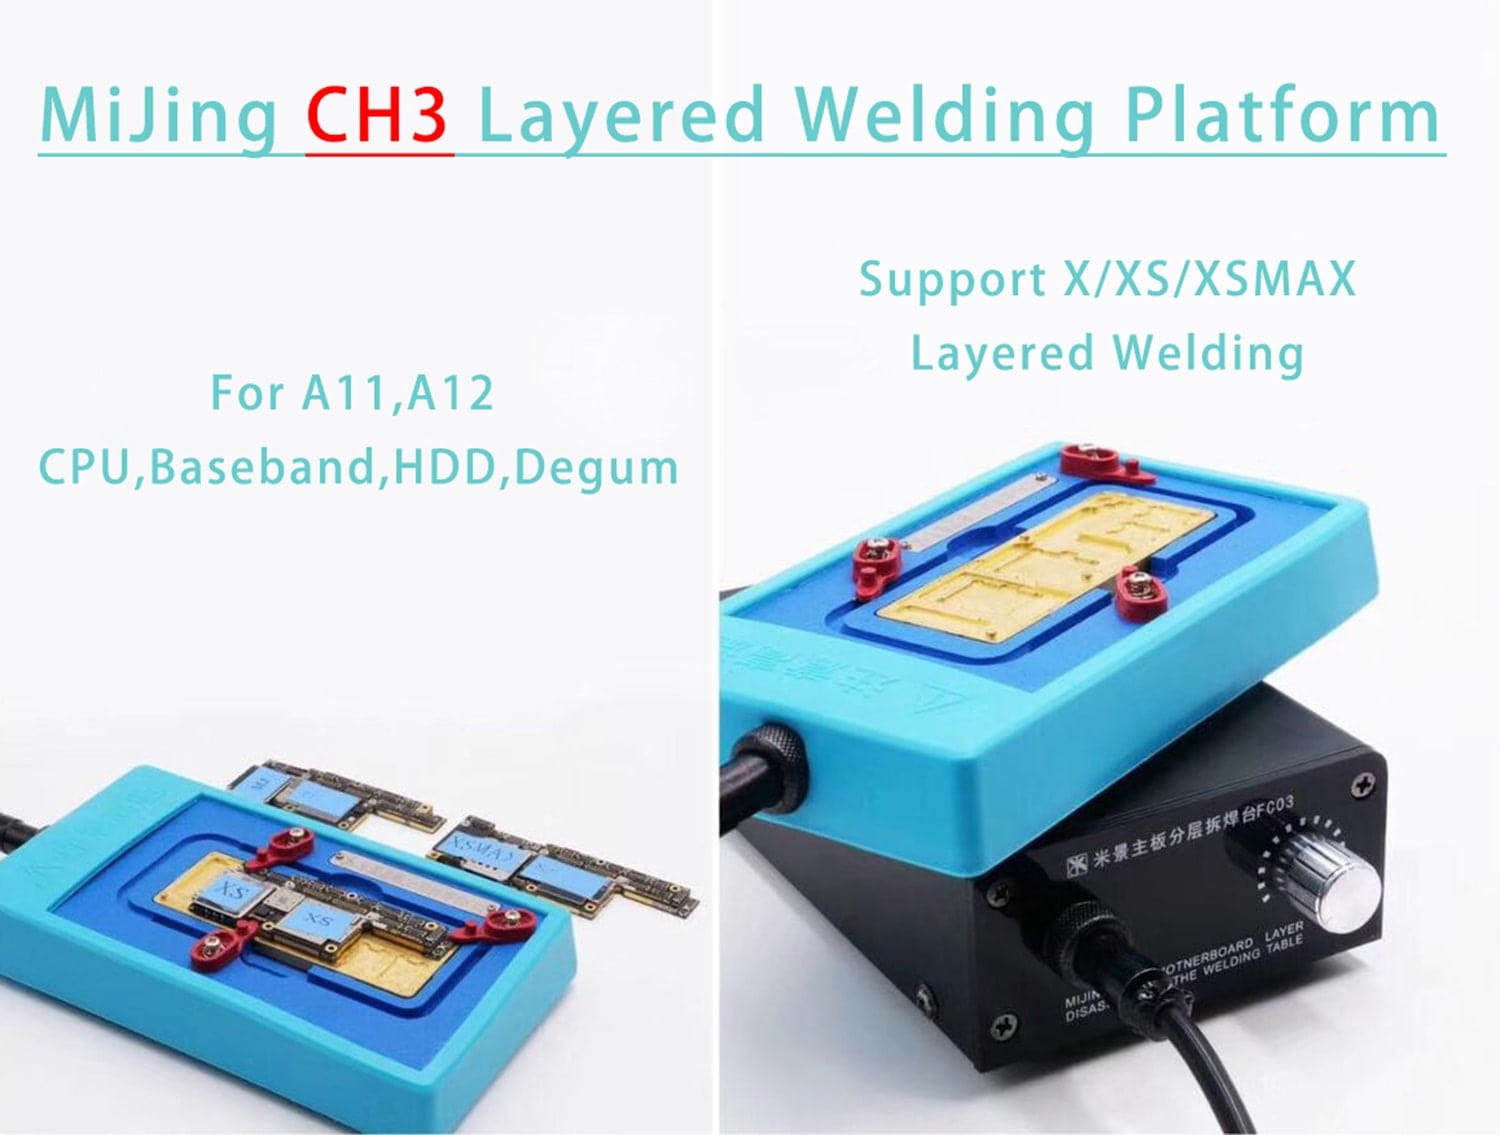 MiJing CH3 Mainboard Layered Welding Platform for iPhone X/XS/XSMAX